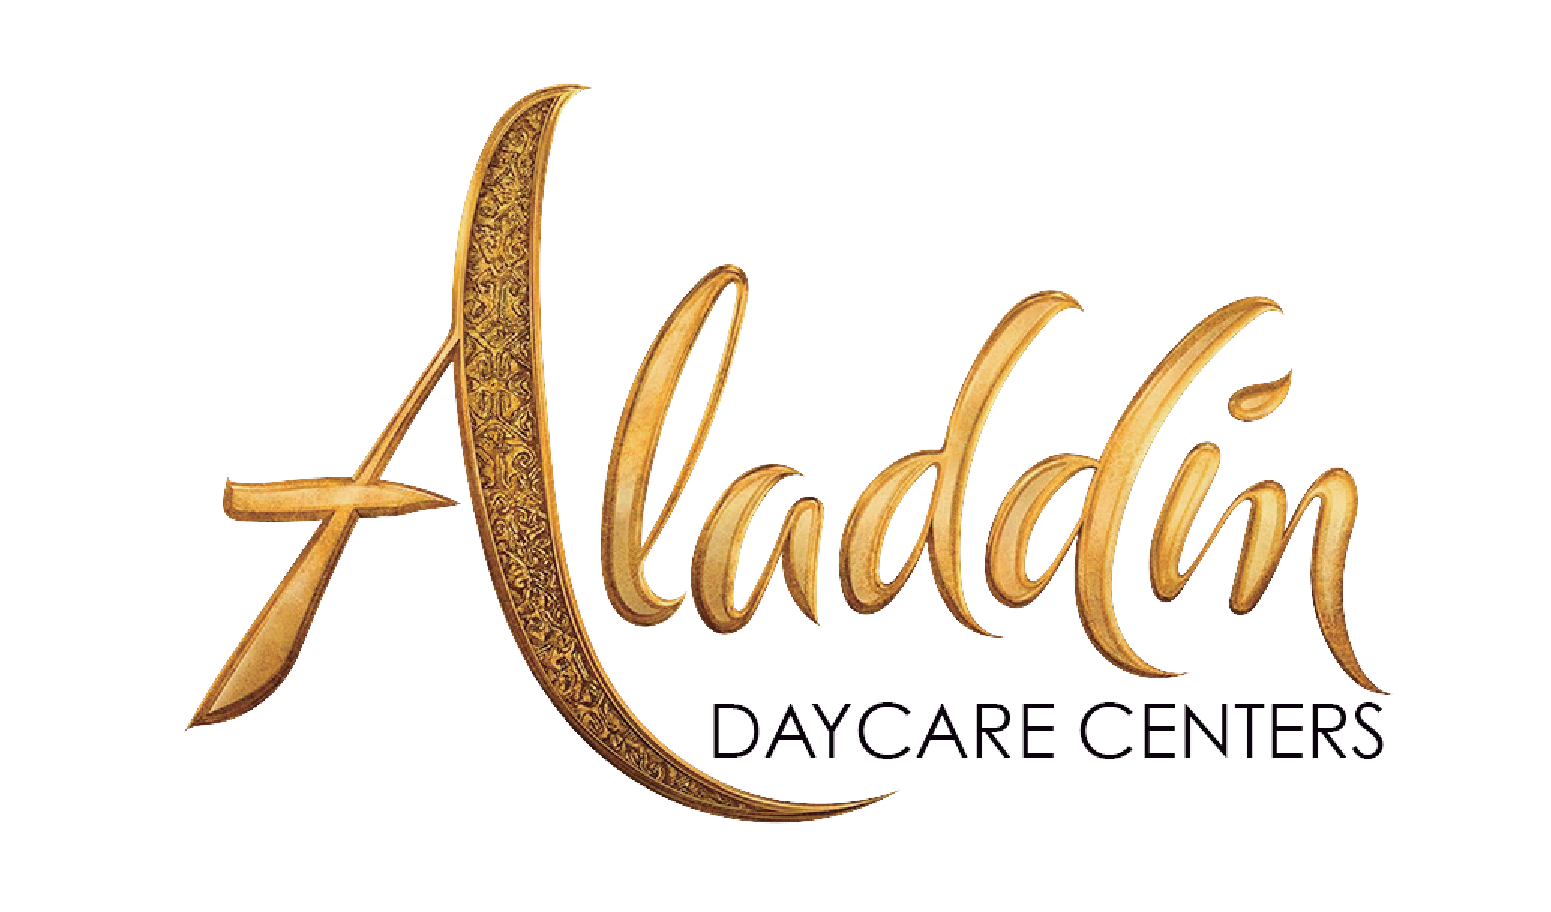 Aladdin Daycare Centers